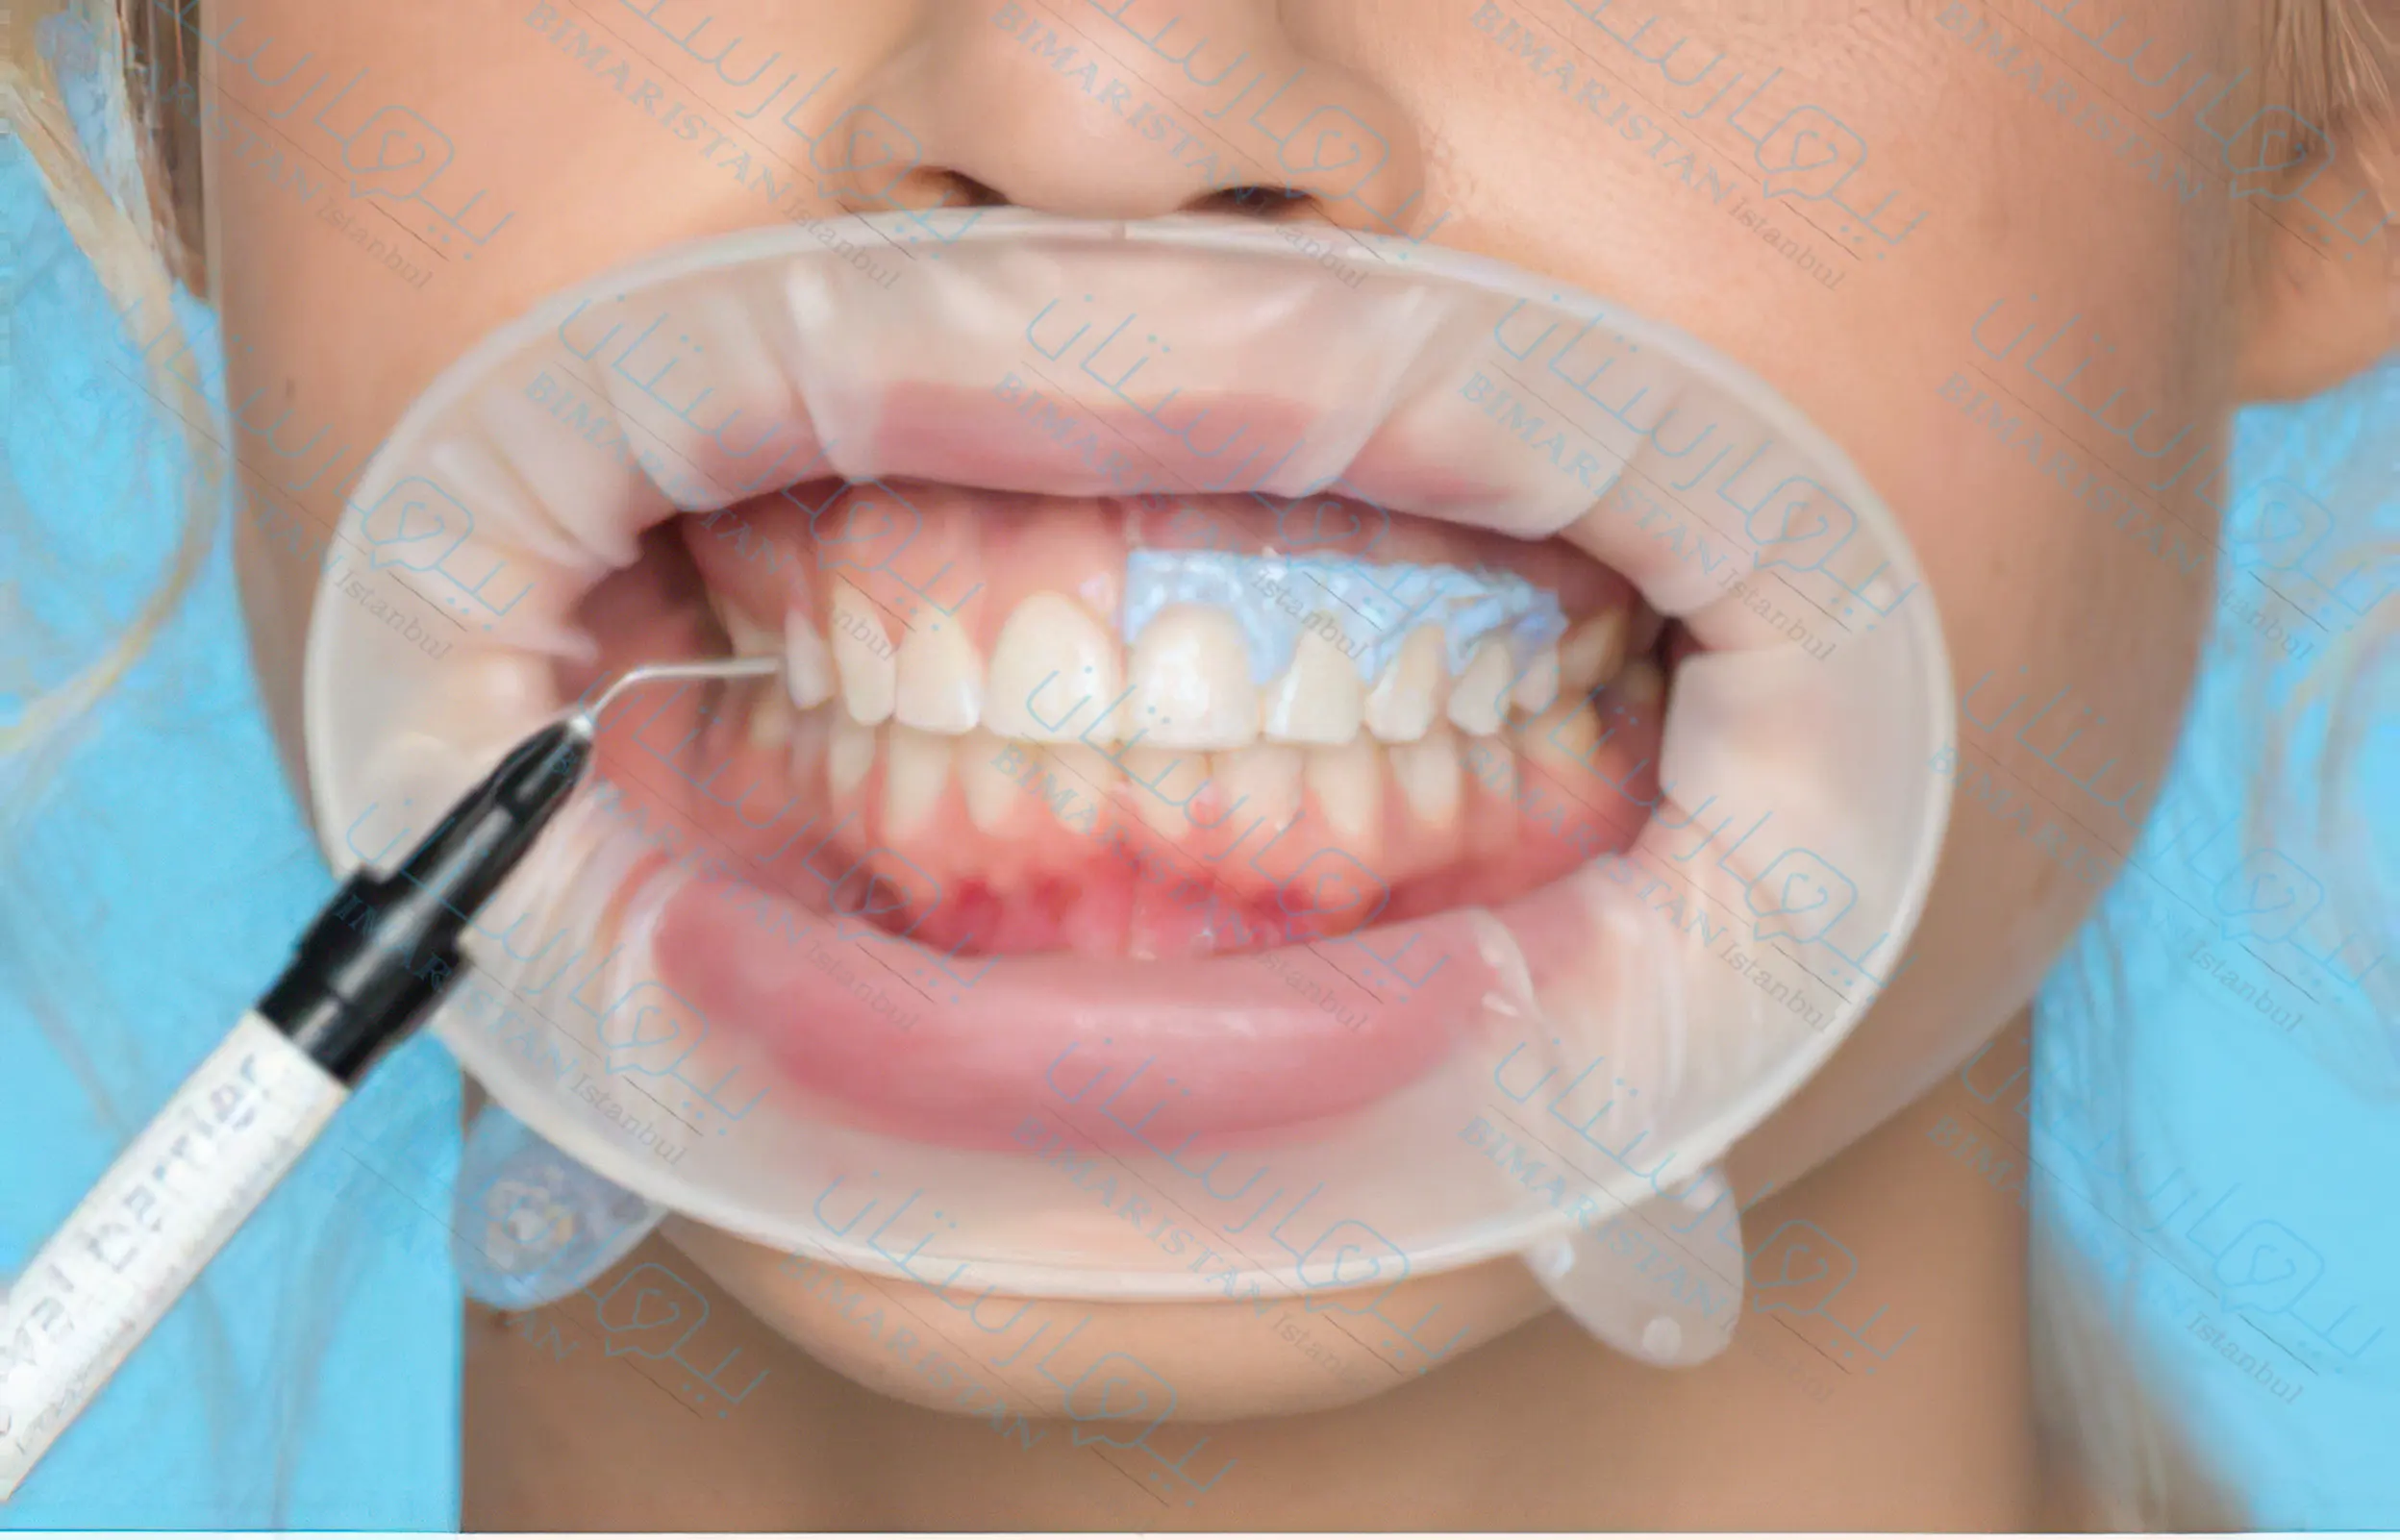 Laser teeth whitening in Turkey